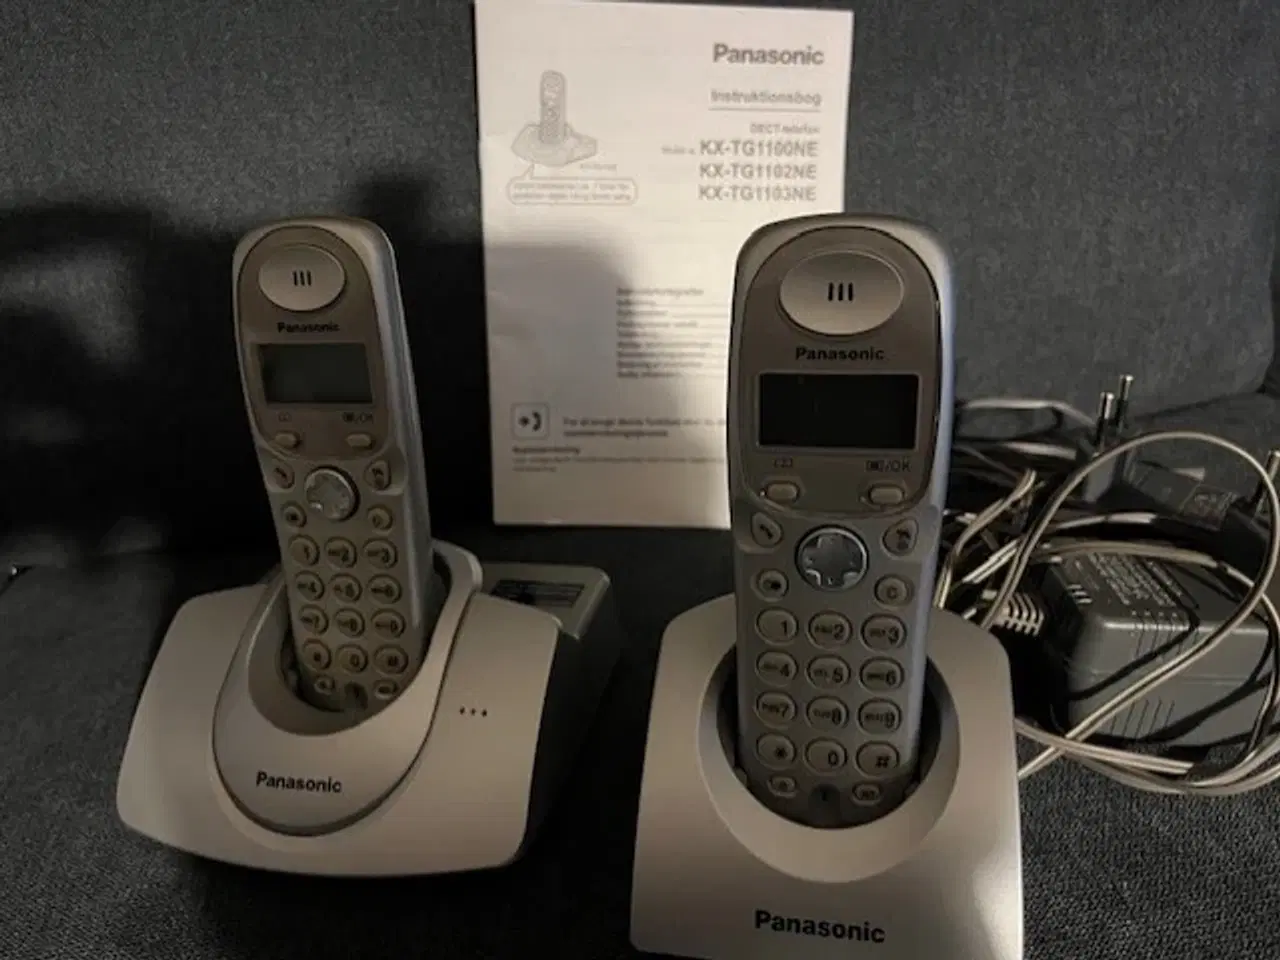 Billede 1 - Panasonic trådløs telefoner, med div ledninger..